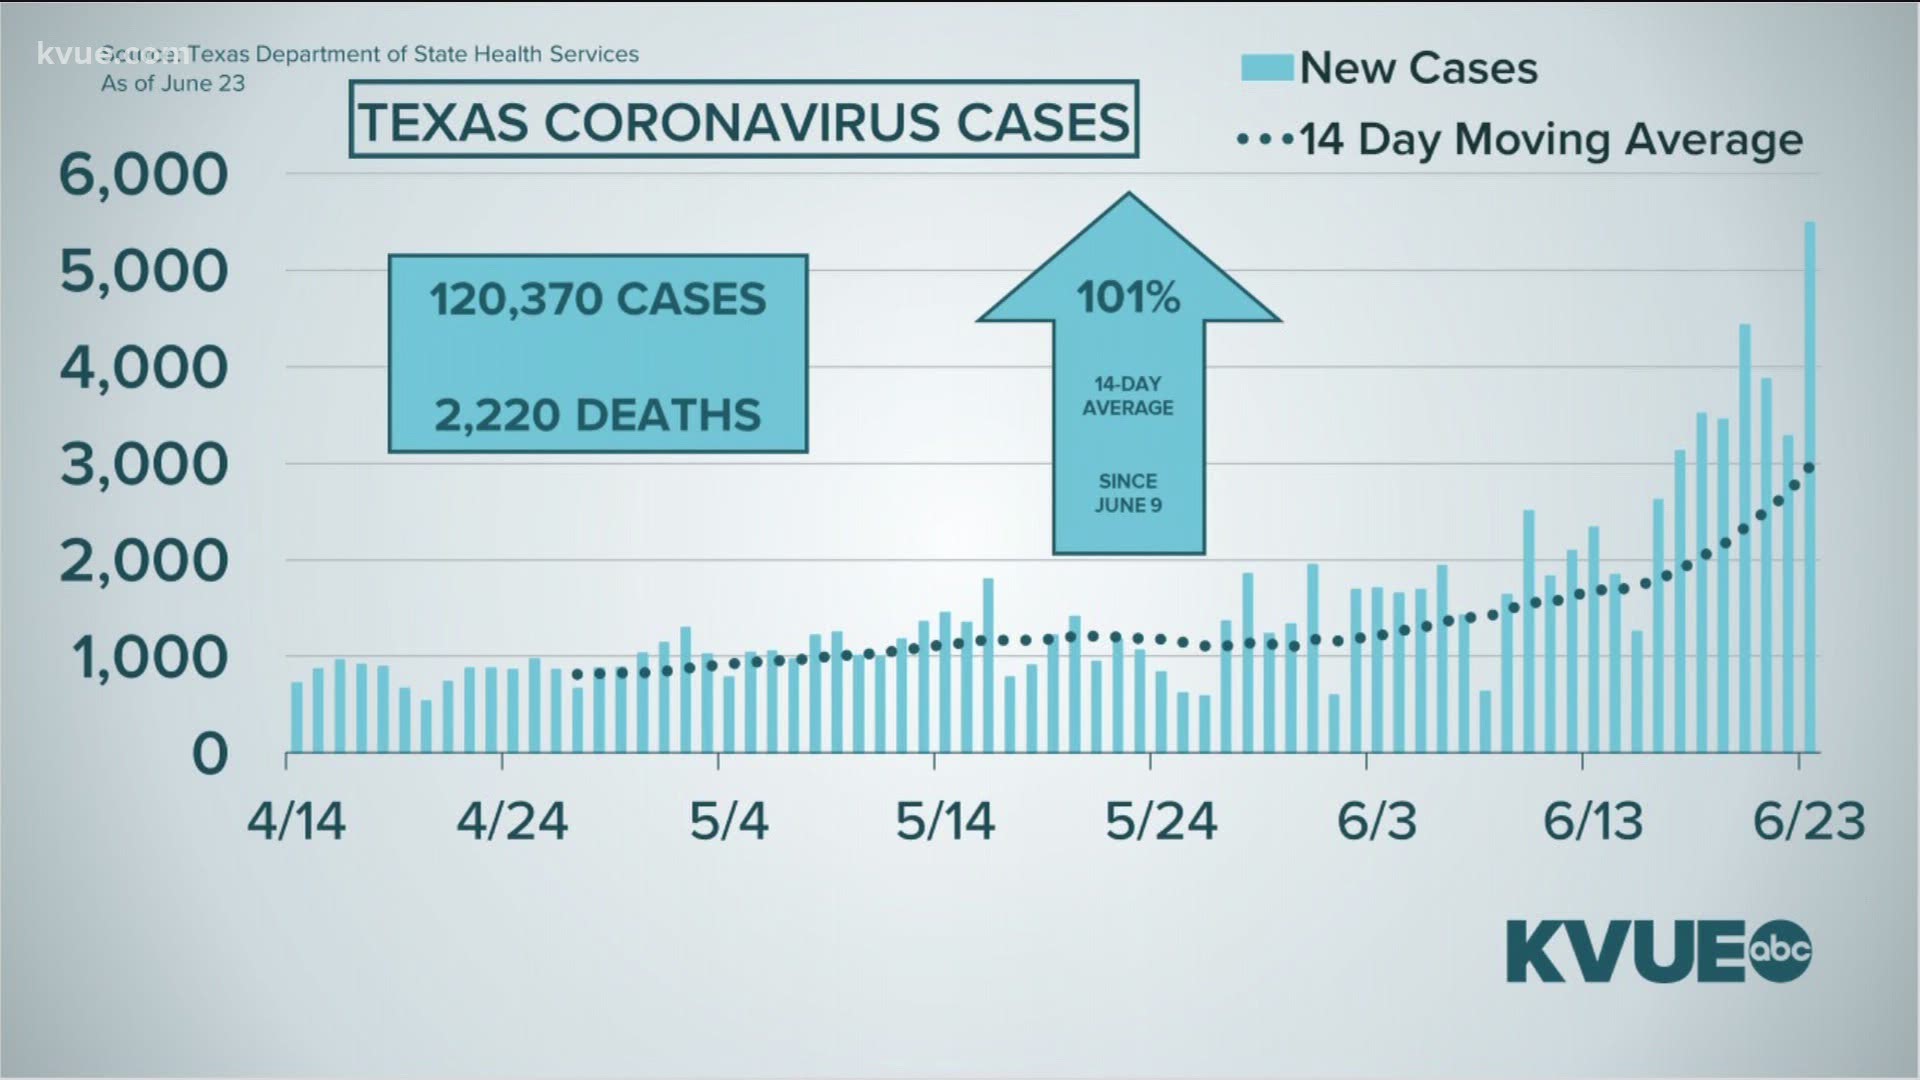 “The coronavirus is serious," Abbott said Tuesday. "It's spreading."